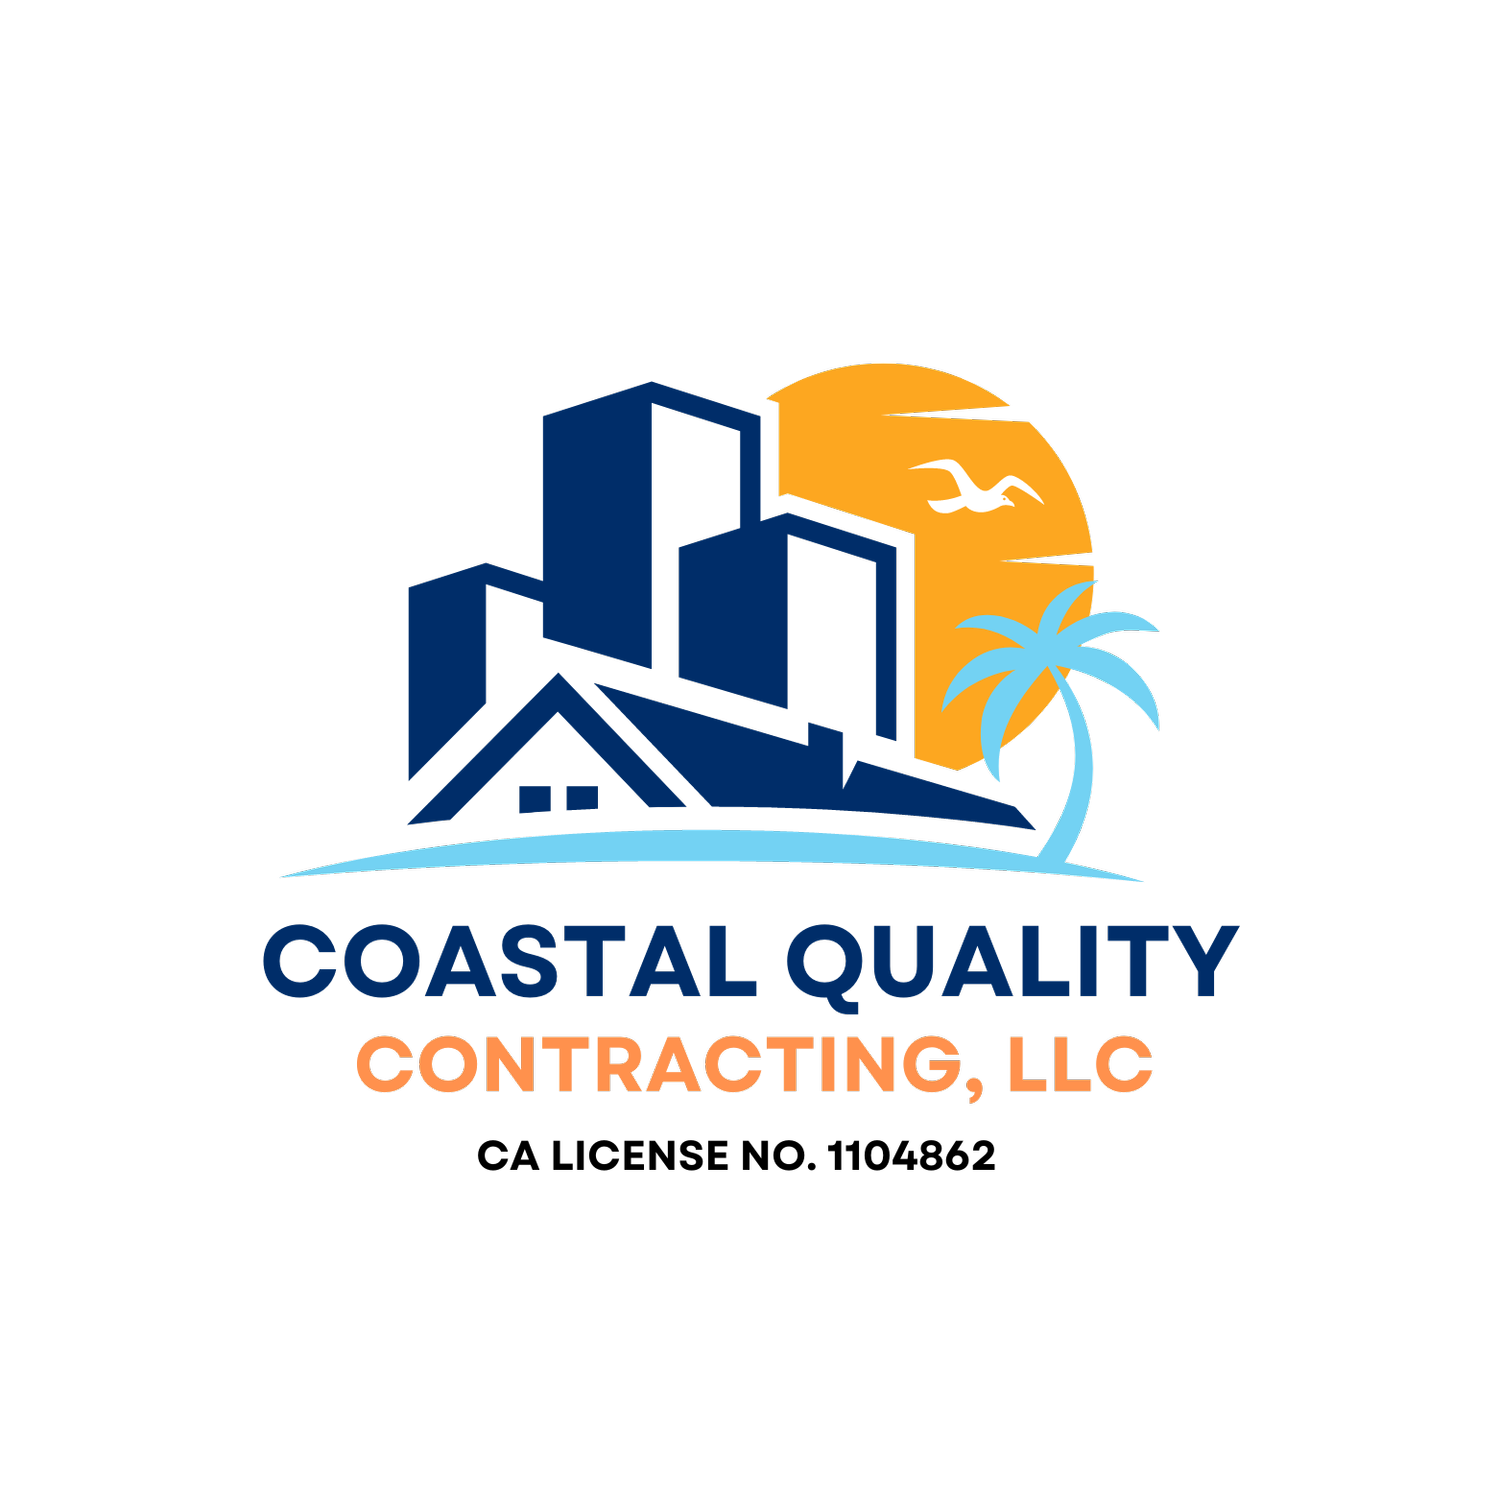 Coastal Quality Contracting, LLC